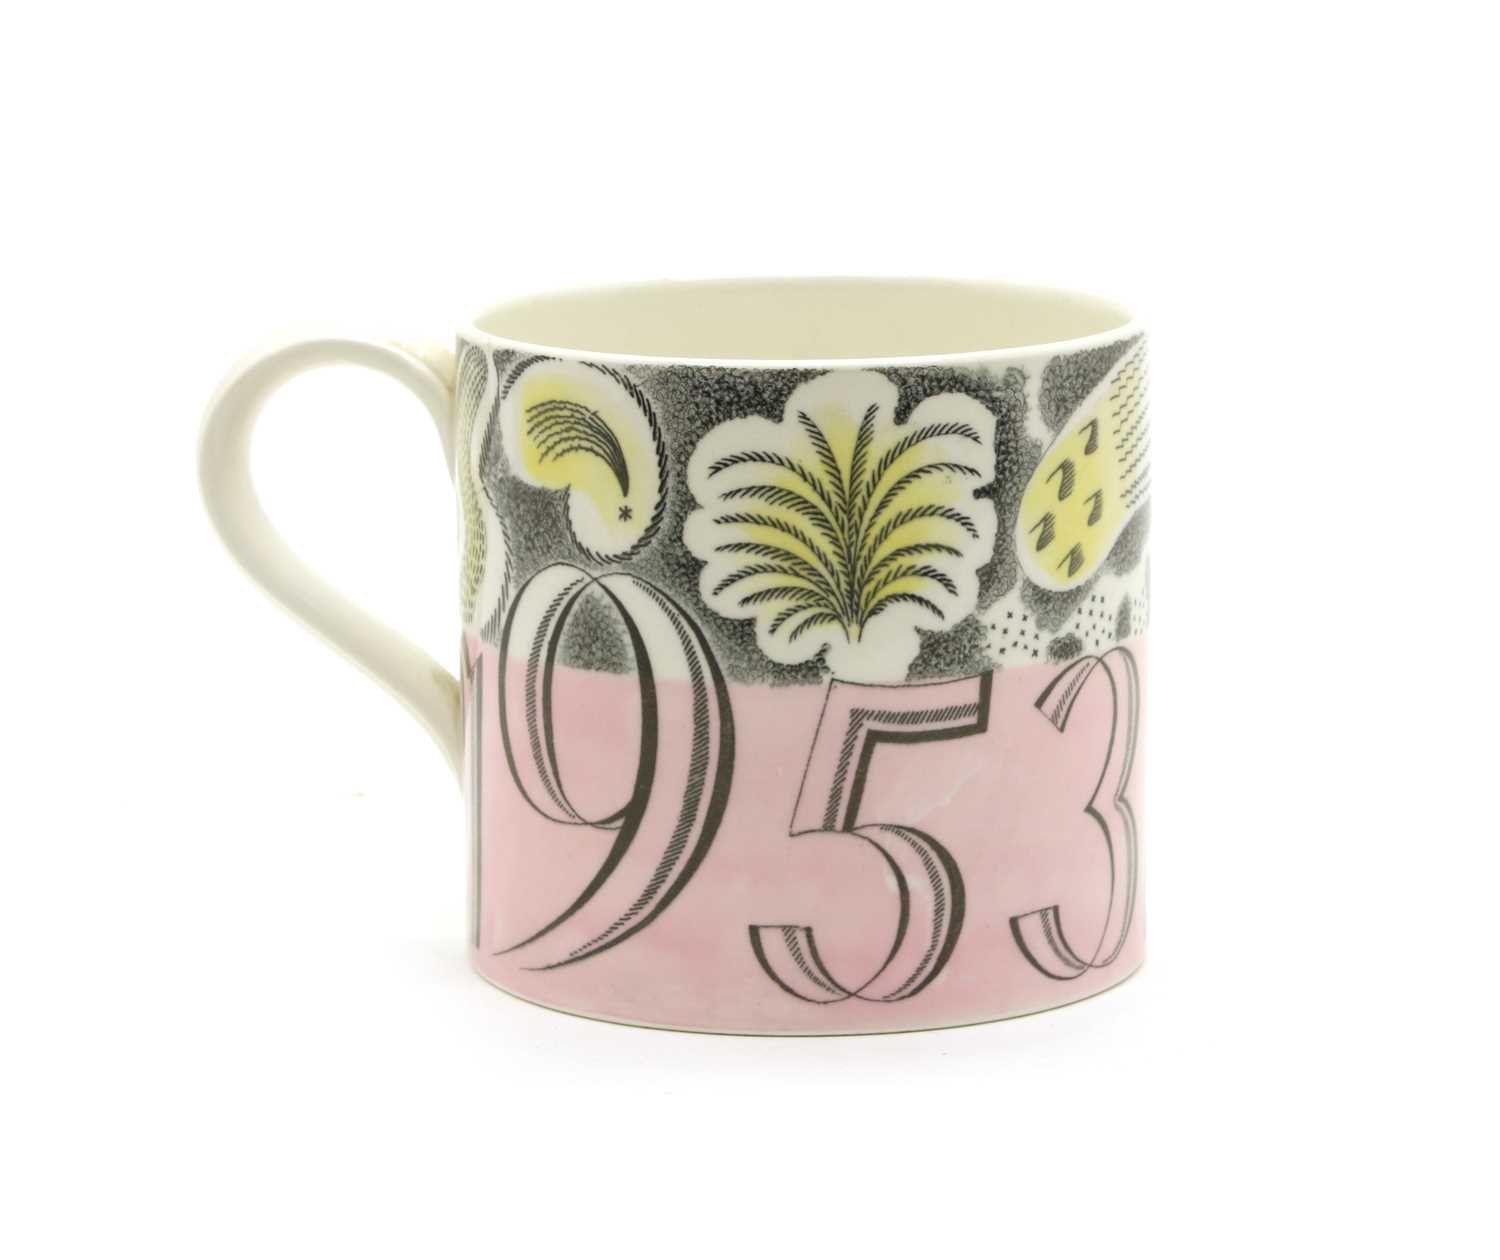 Lot 161 - A Wedgwood Elizabeth II coronation mug